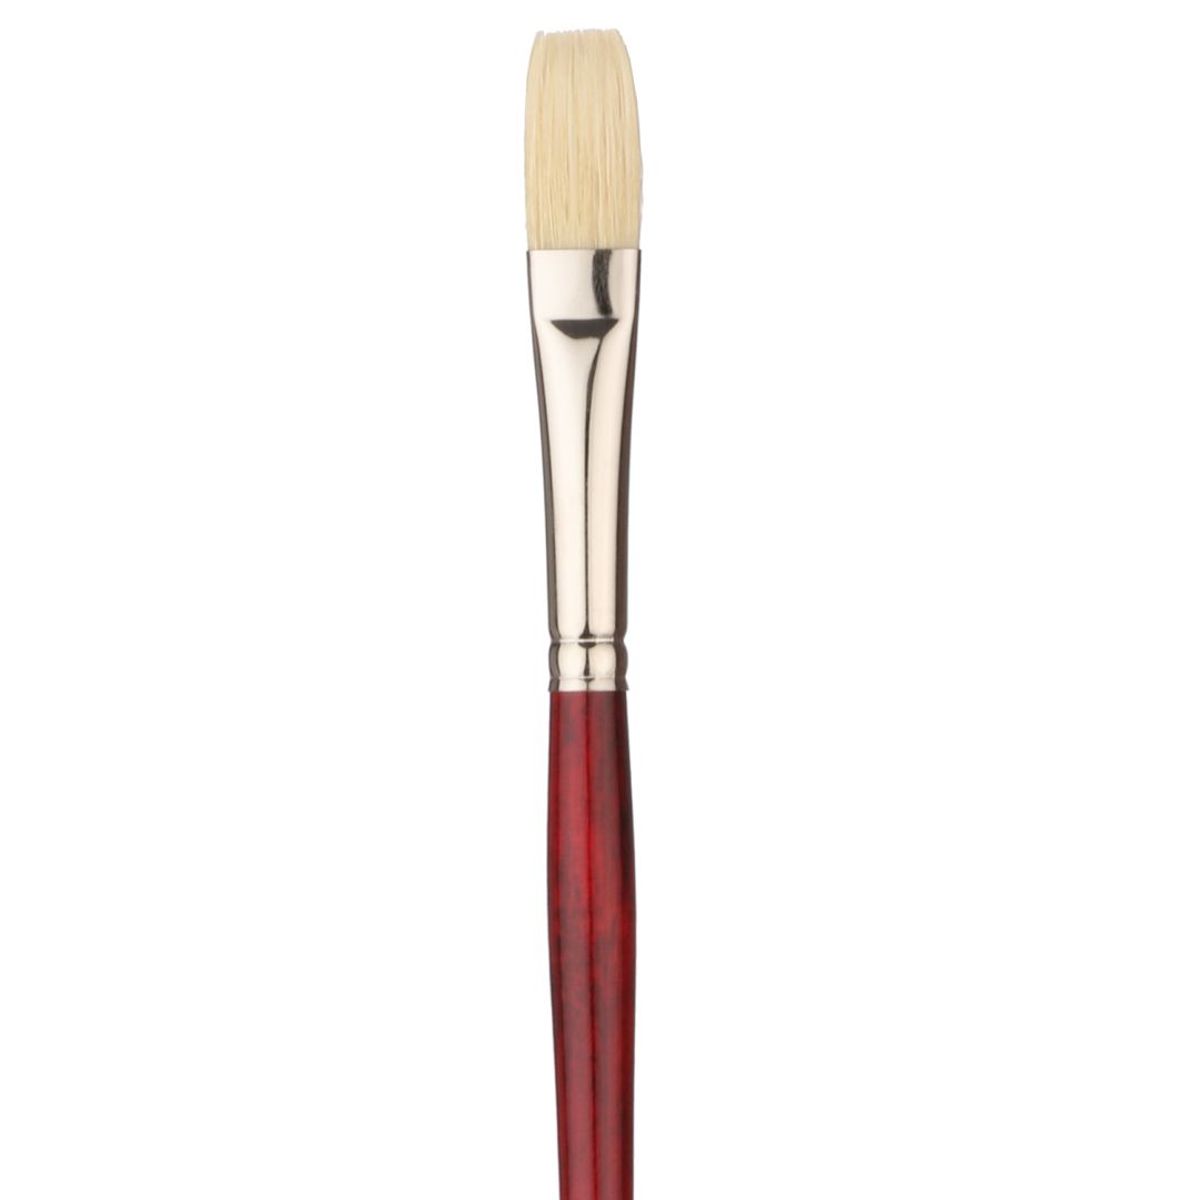 Art Essentials Supremo White Hog Bristle Brush - Series 140f - Flat - Long Handle - Size: 8